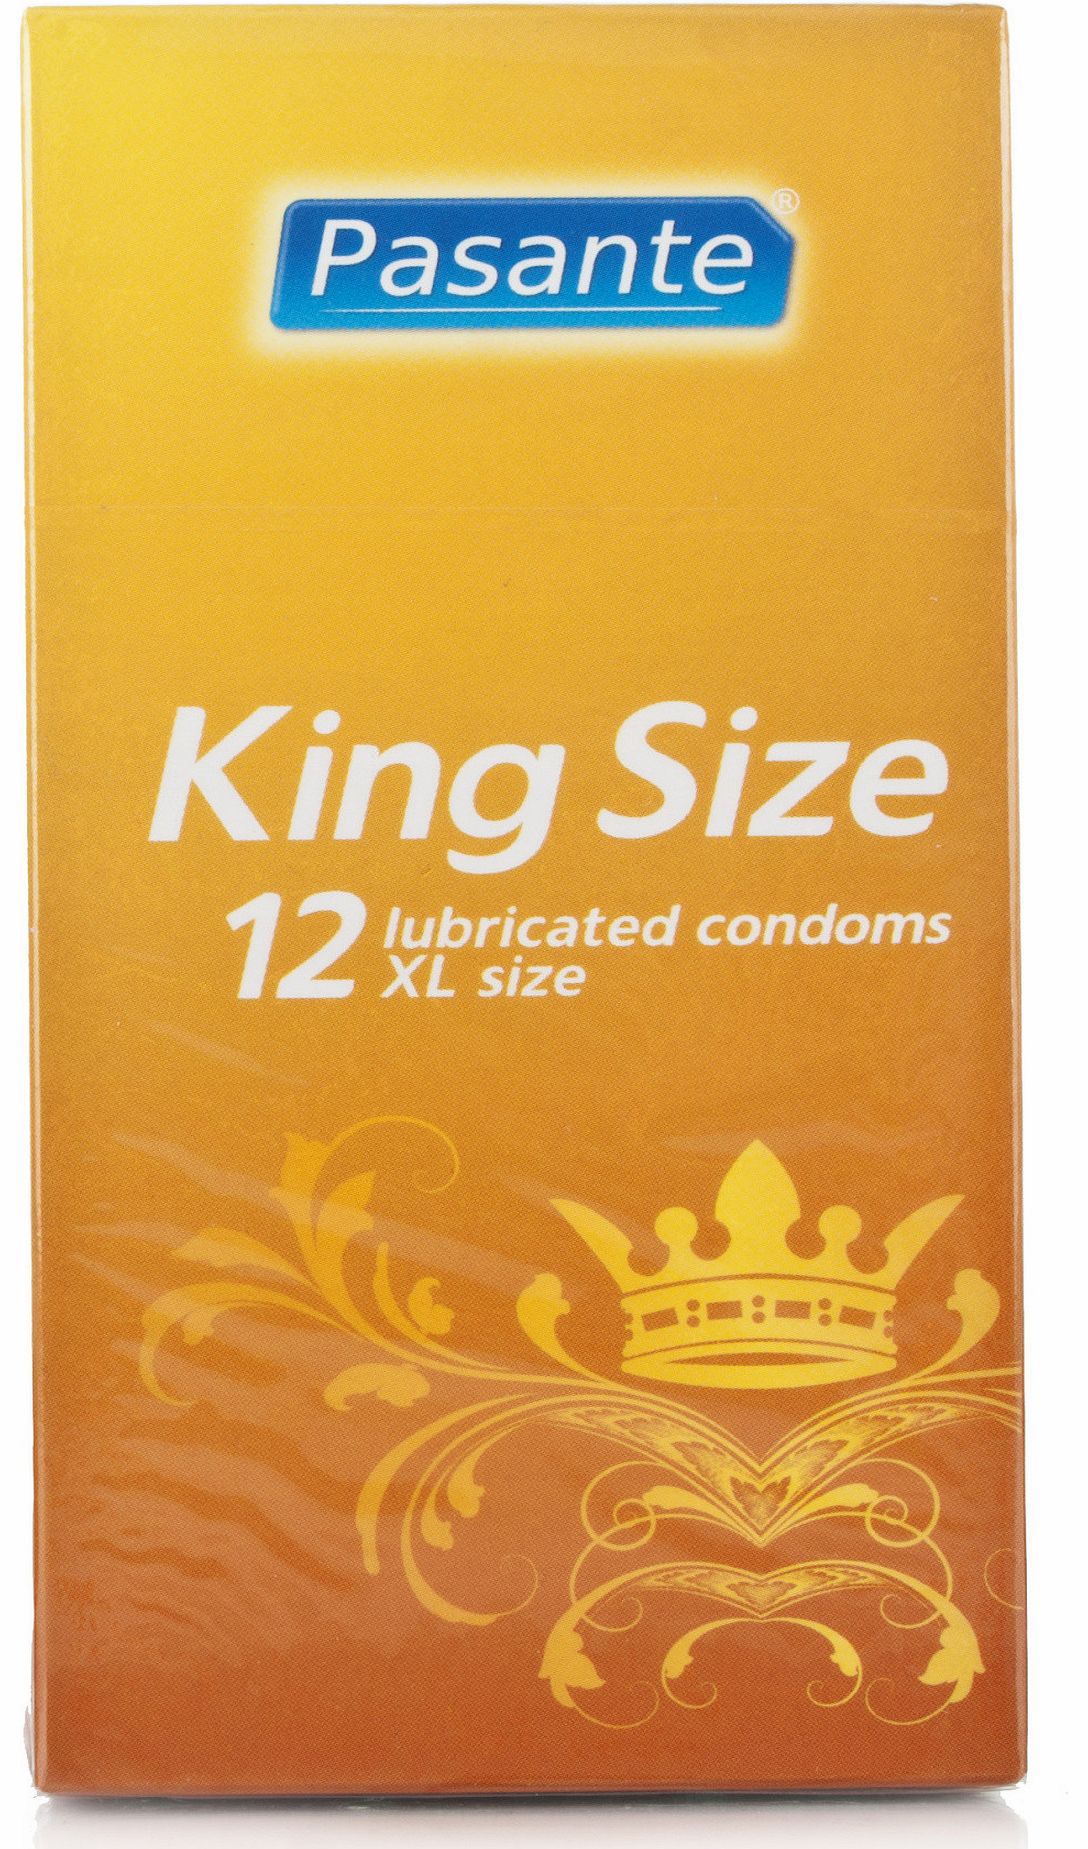 King Size Condoms